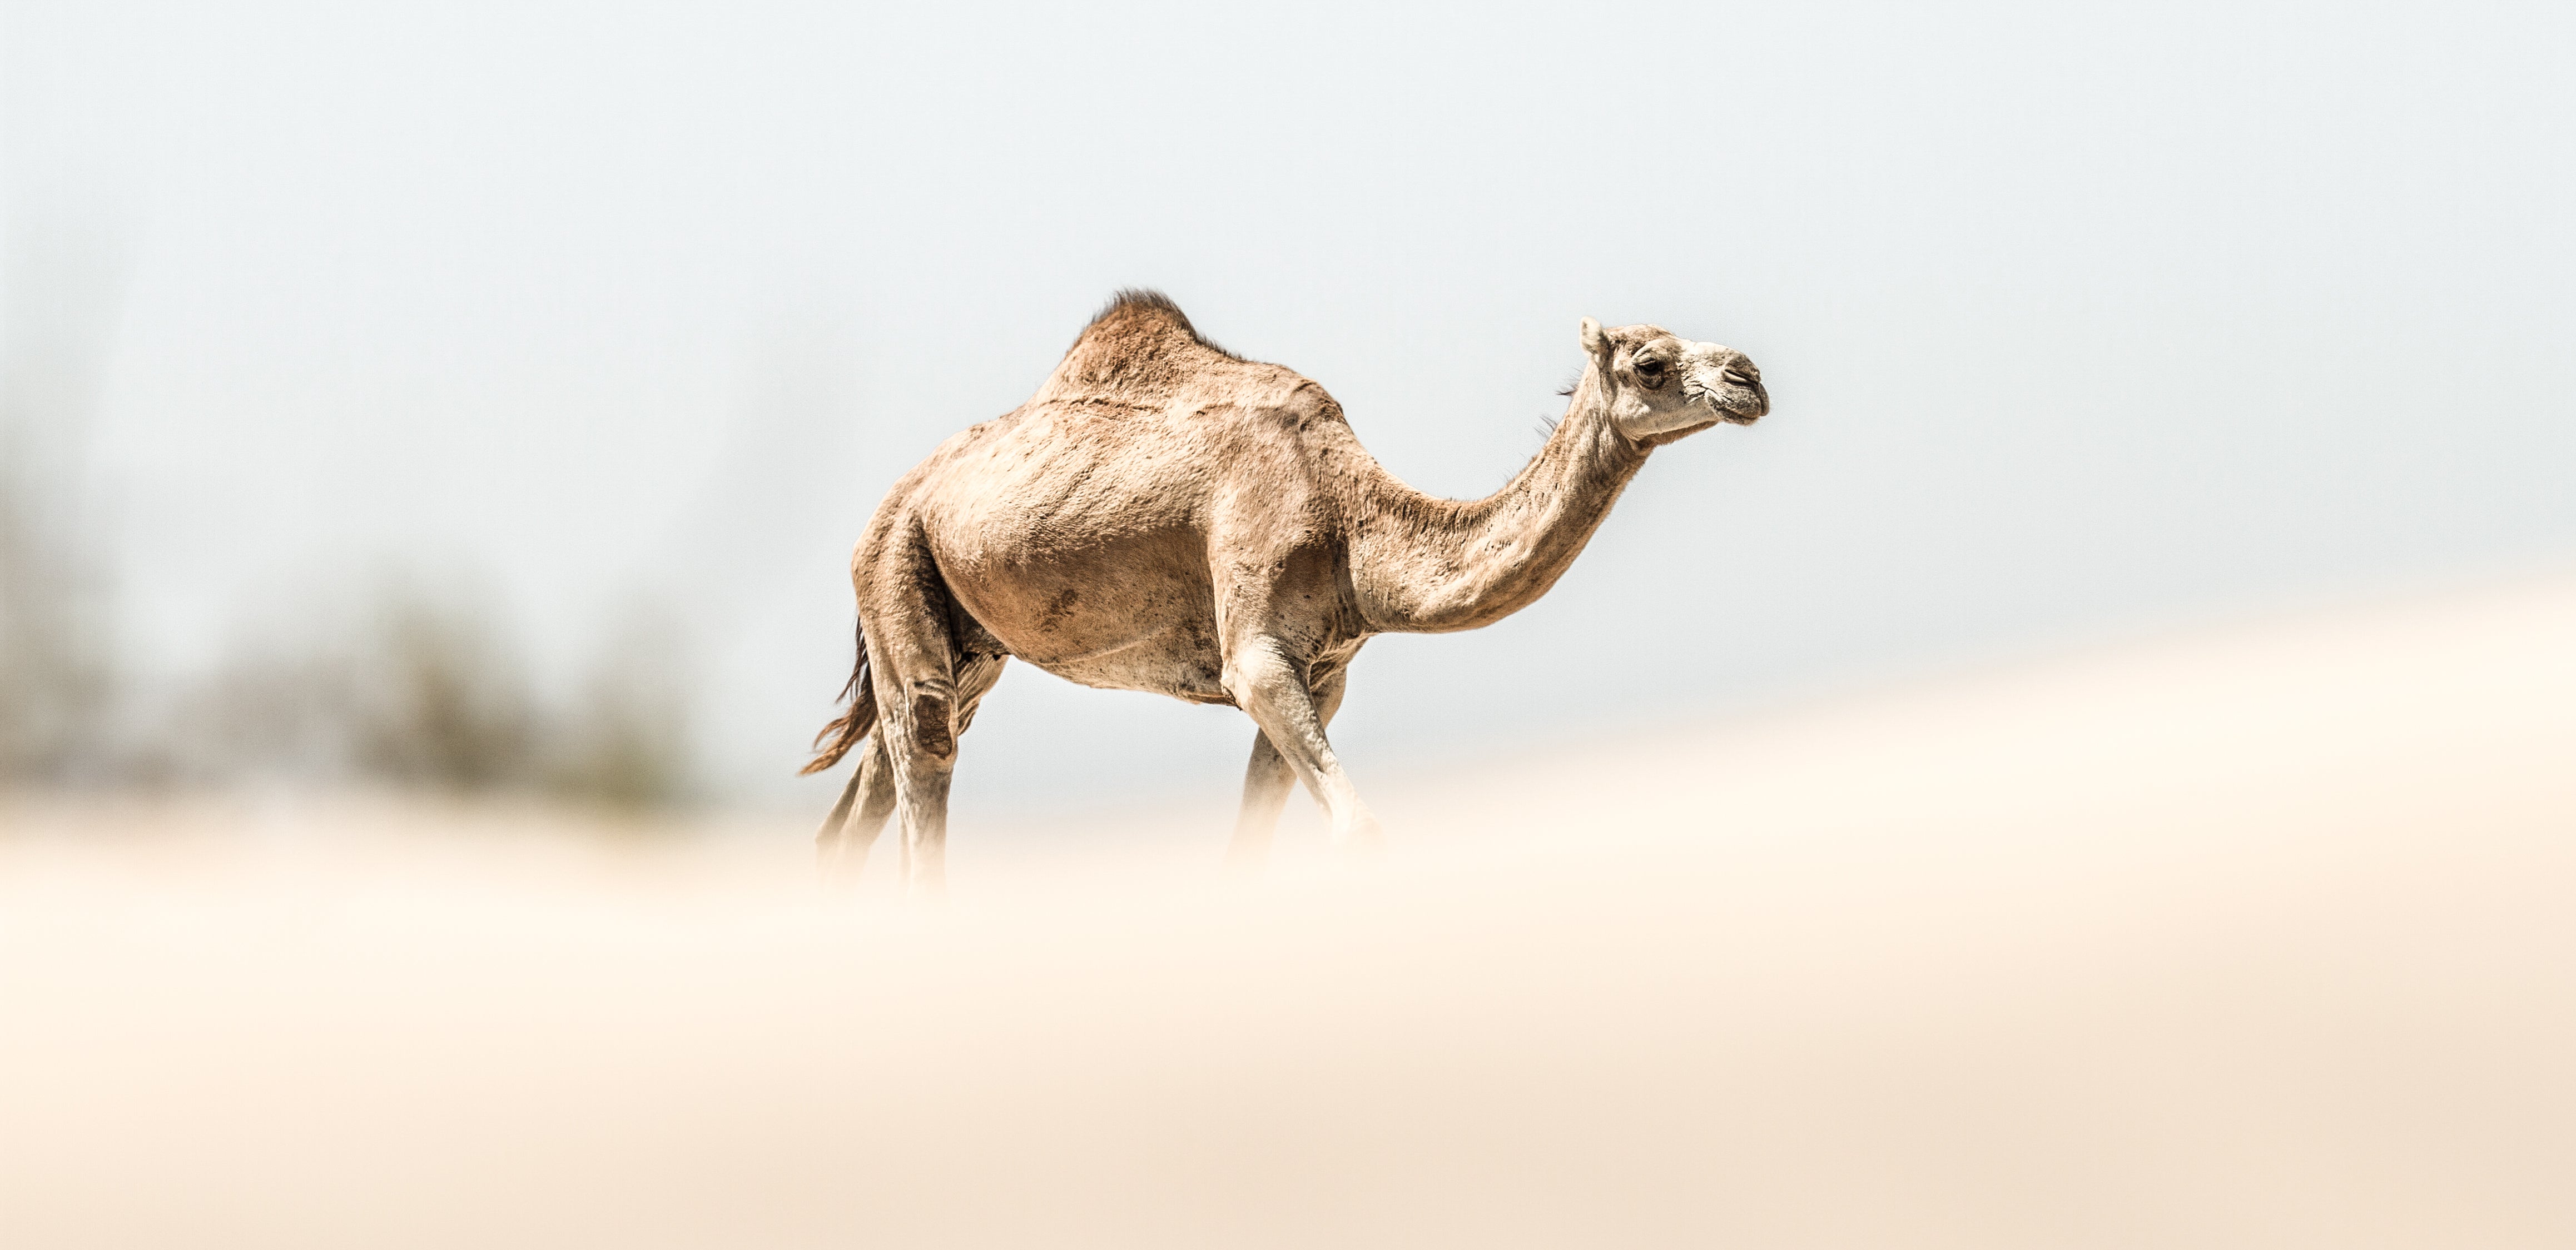 Solitary camel